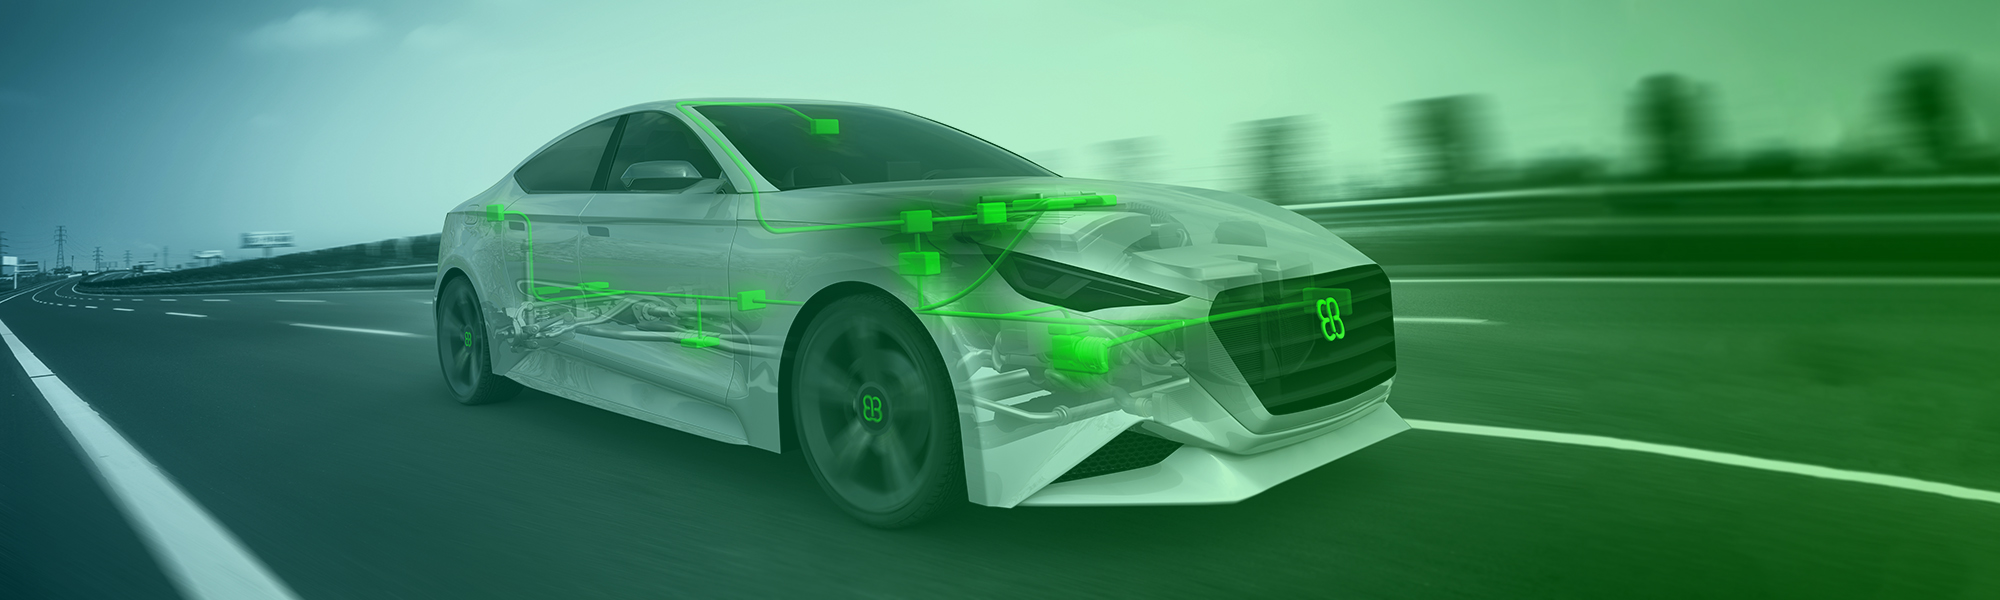 automotive software integration